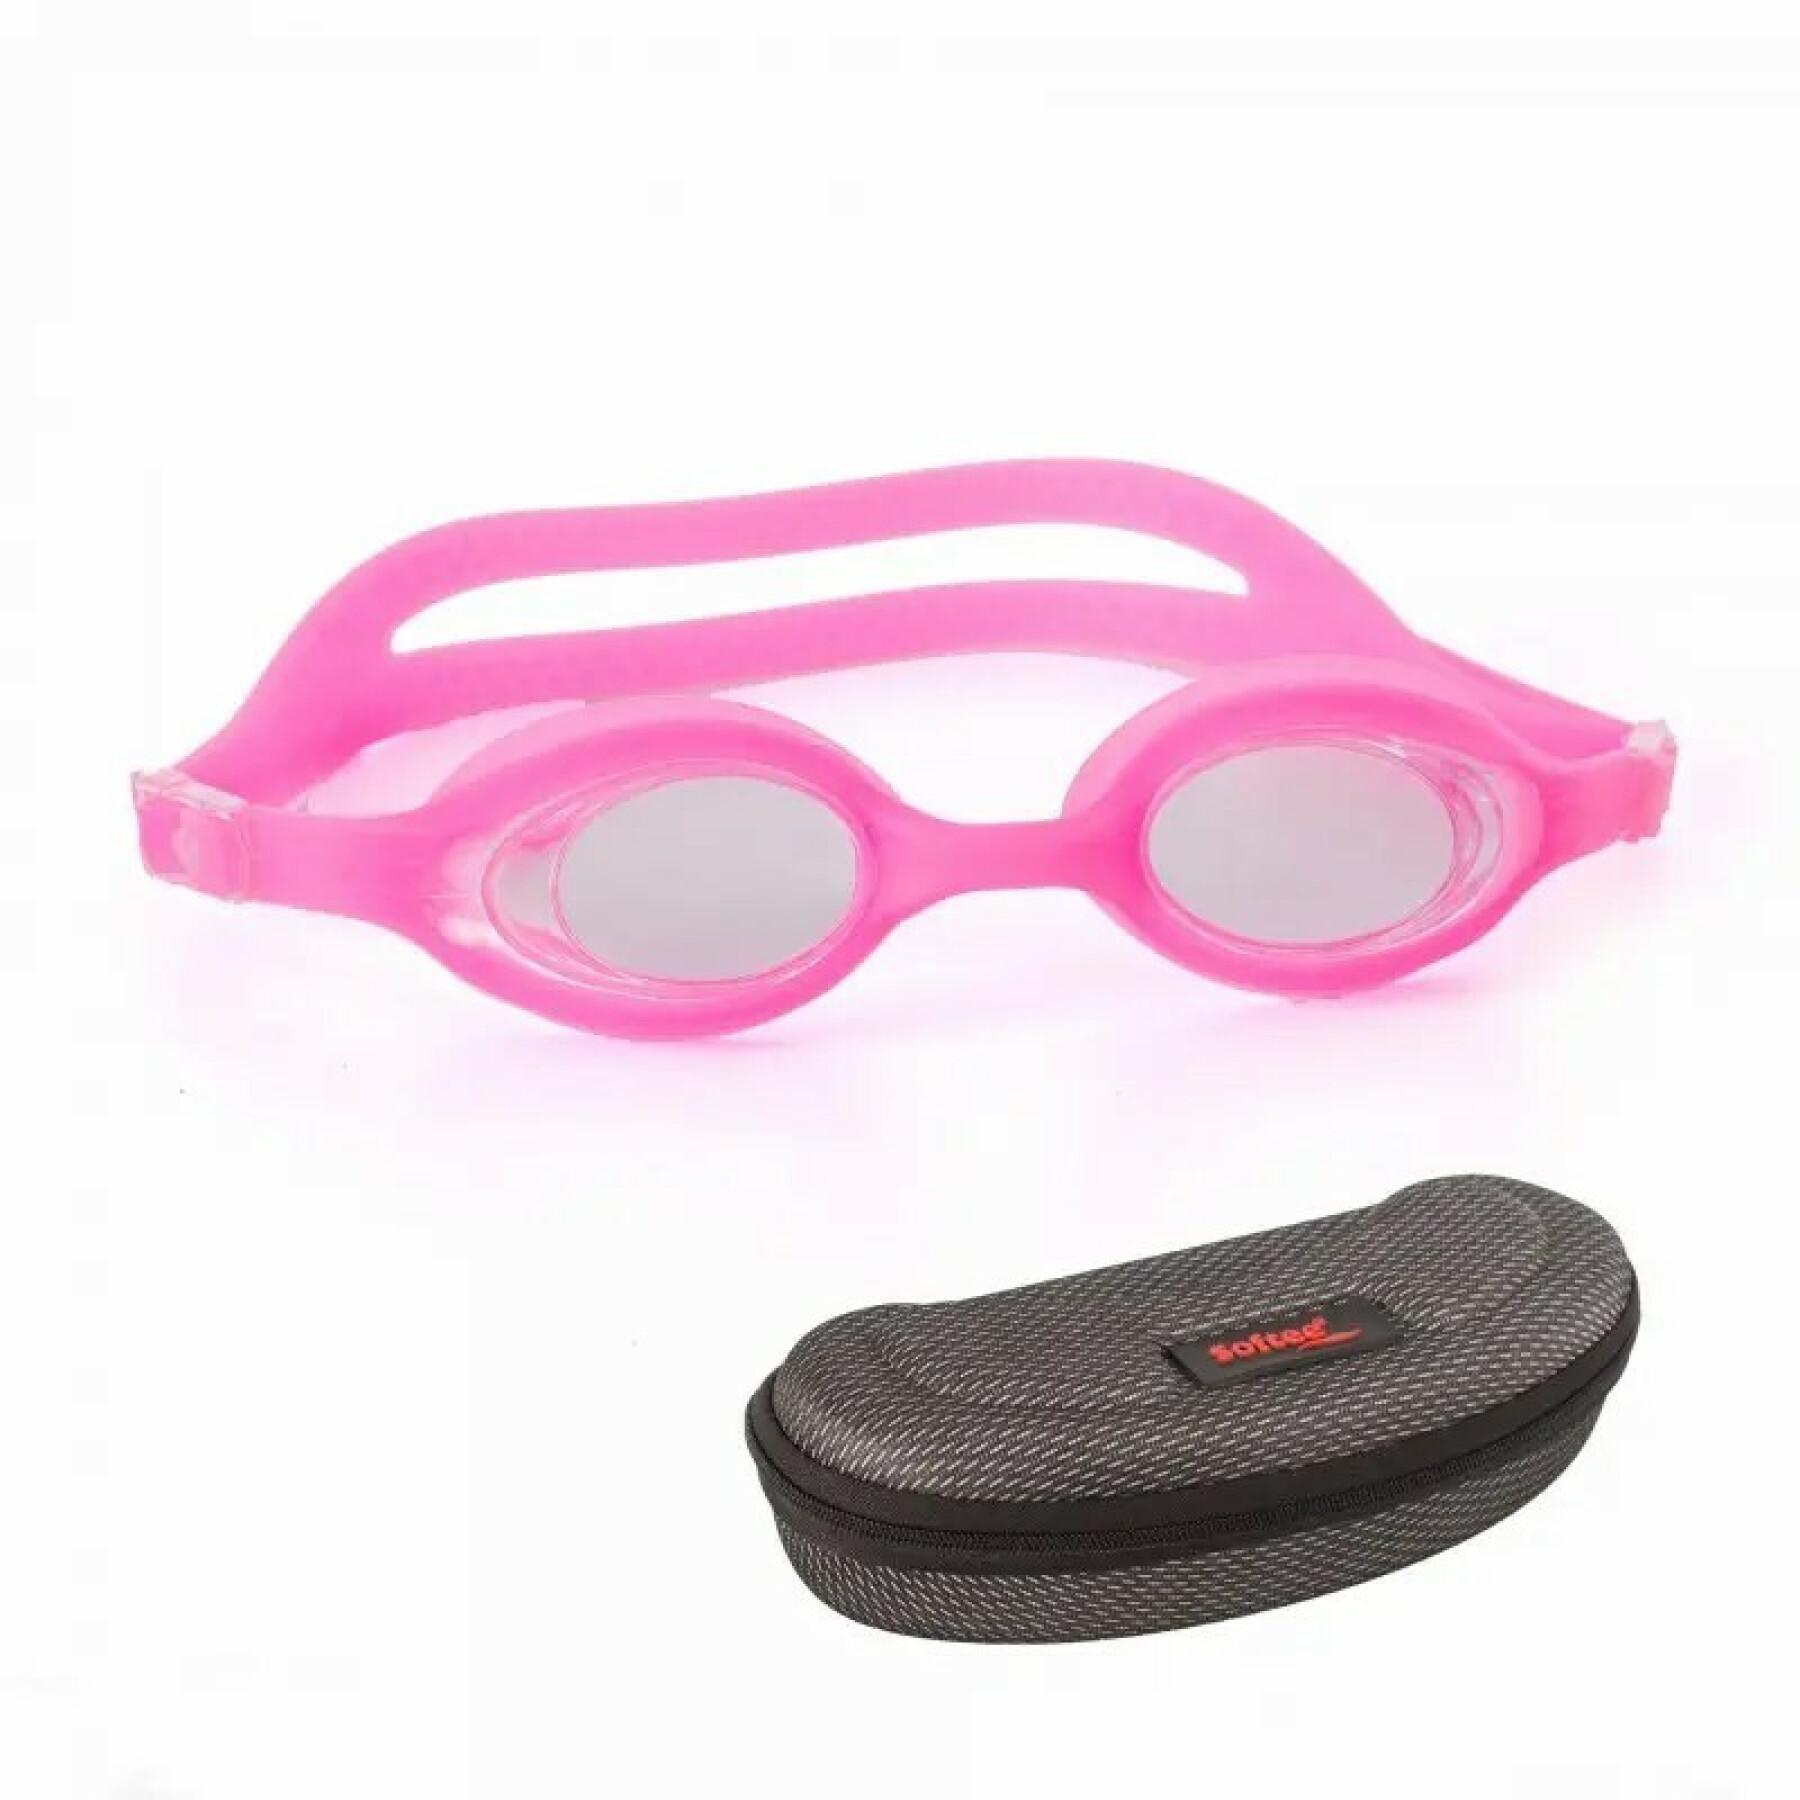 Swimming goggles Softee Sumit